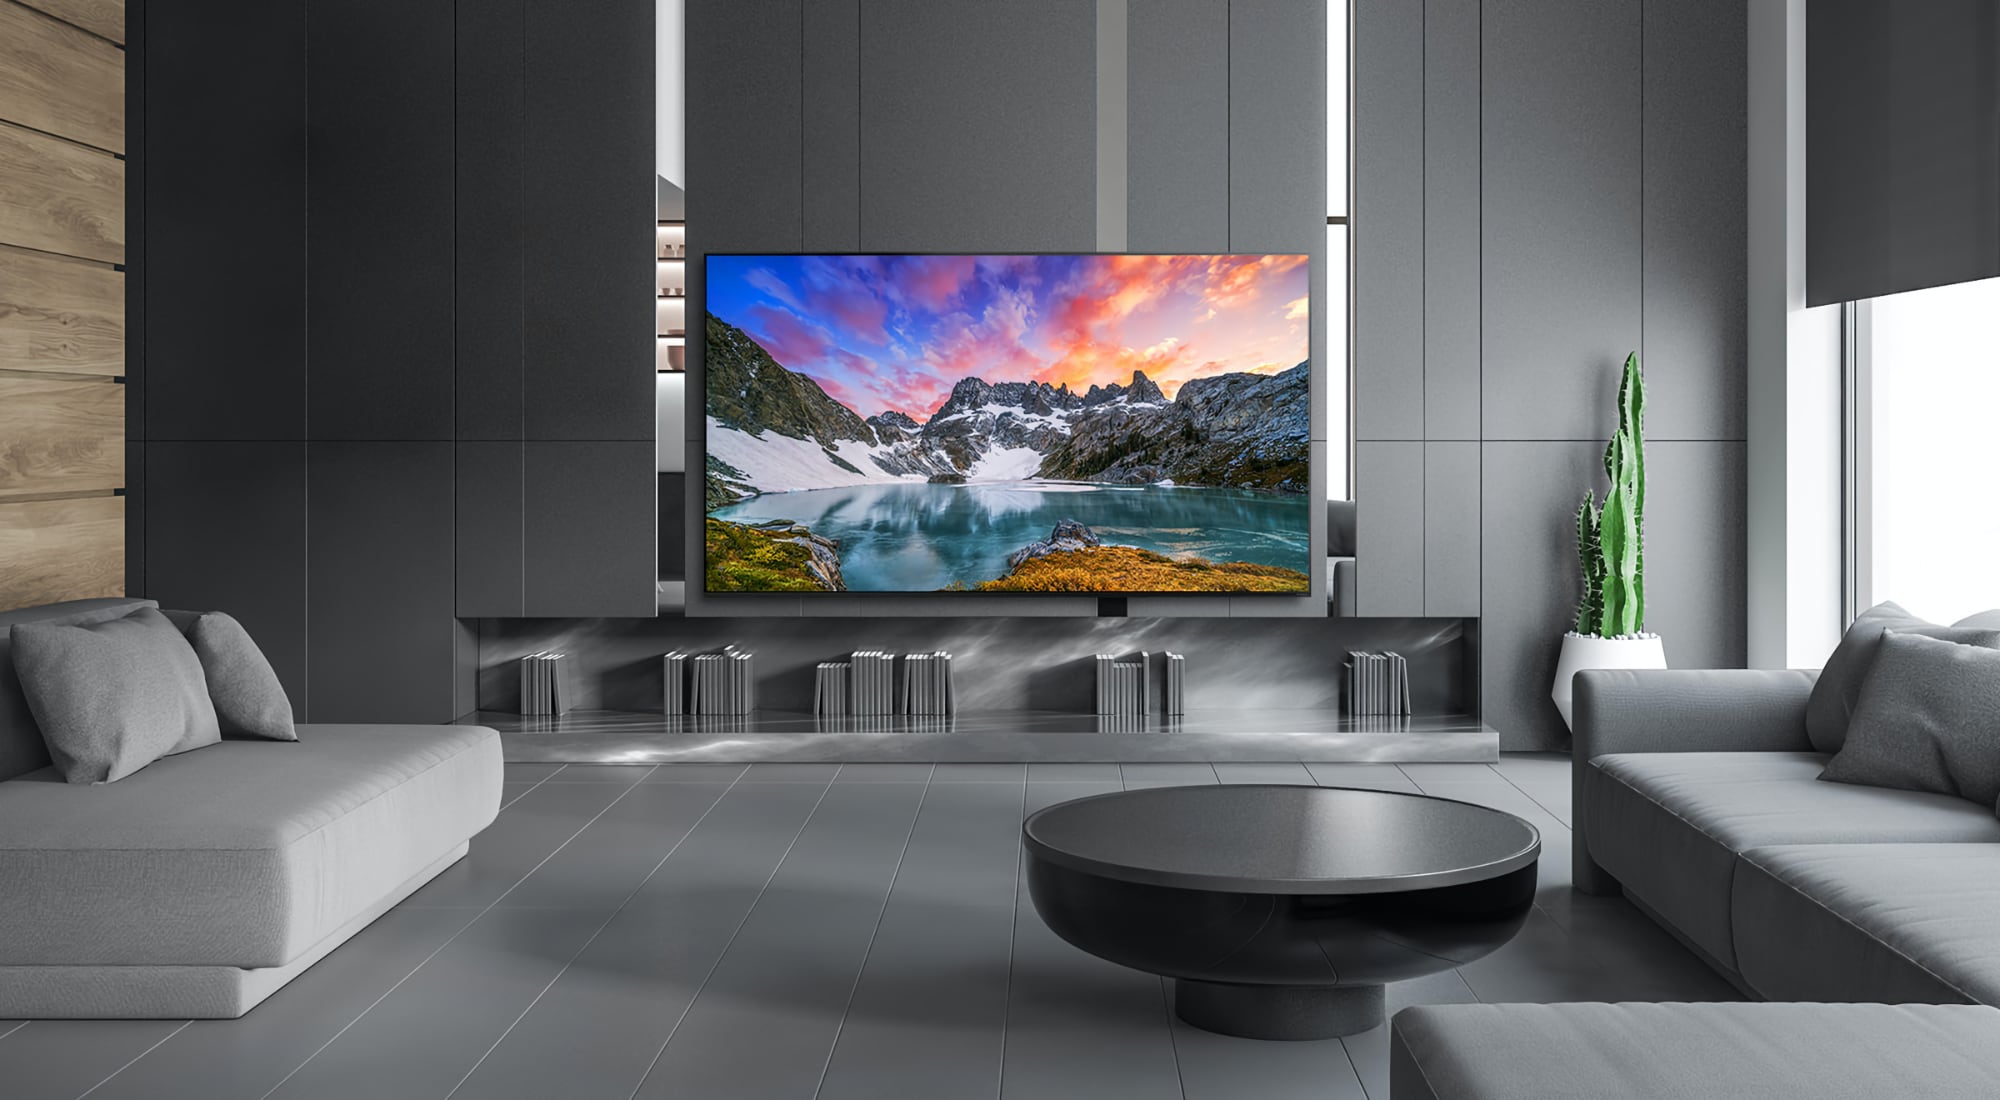  LG 2020 LCD TV